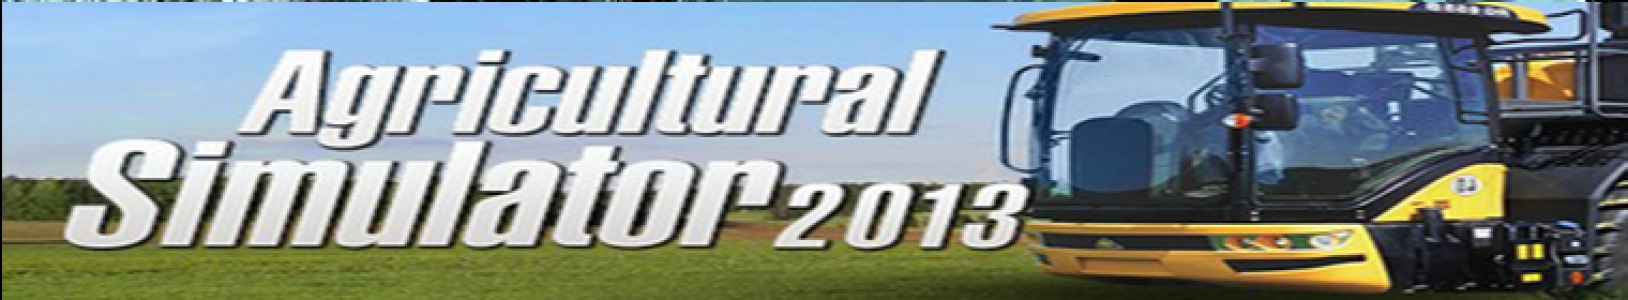 Agricultural Simulator 2013 banner